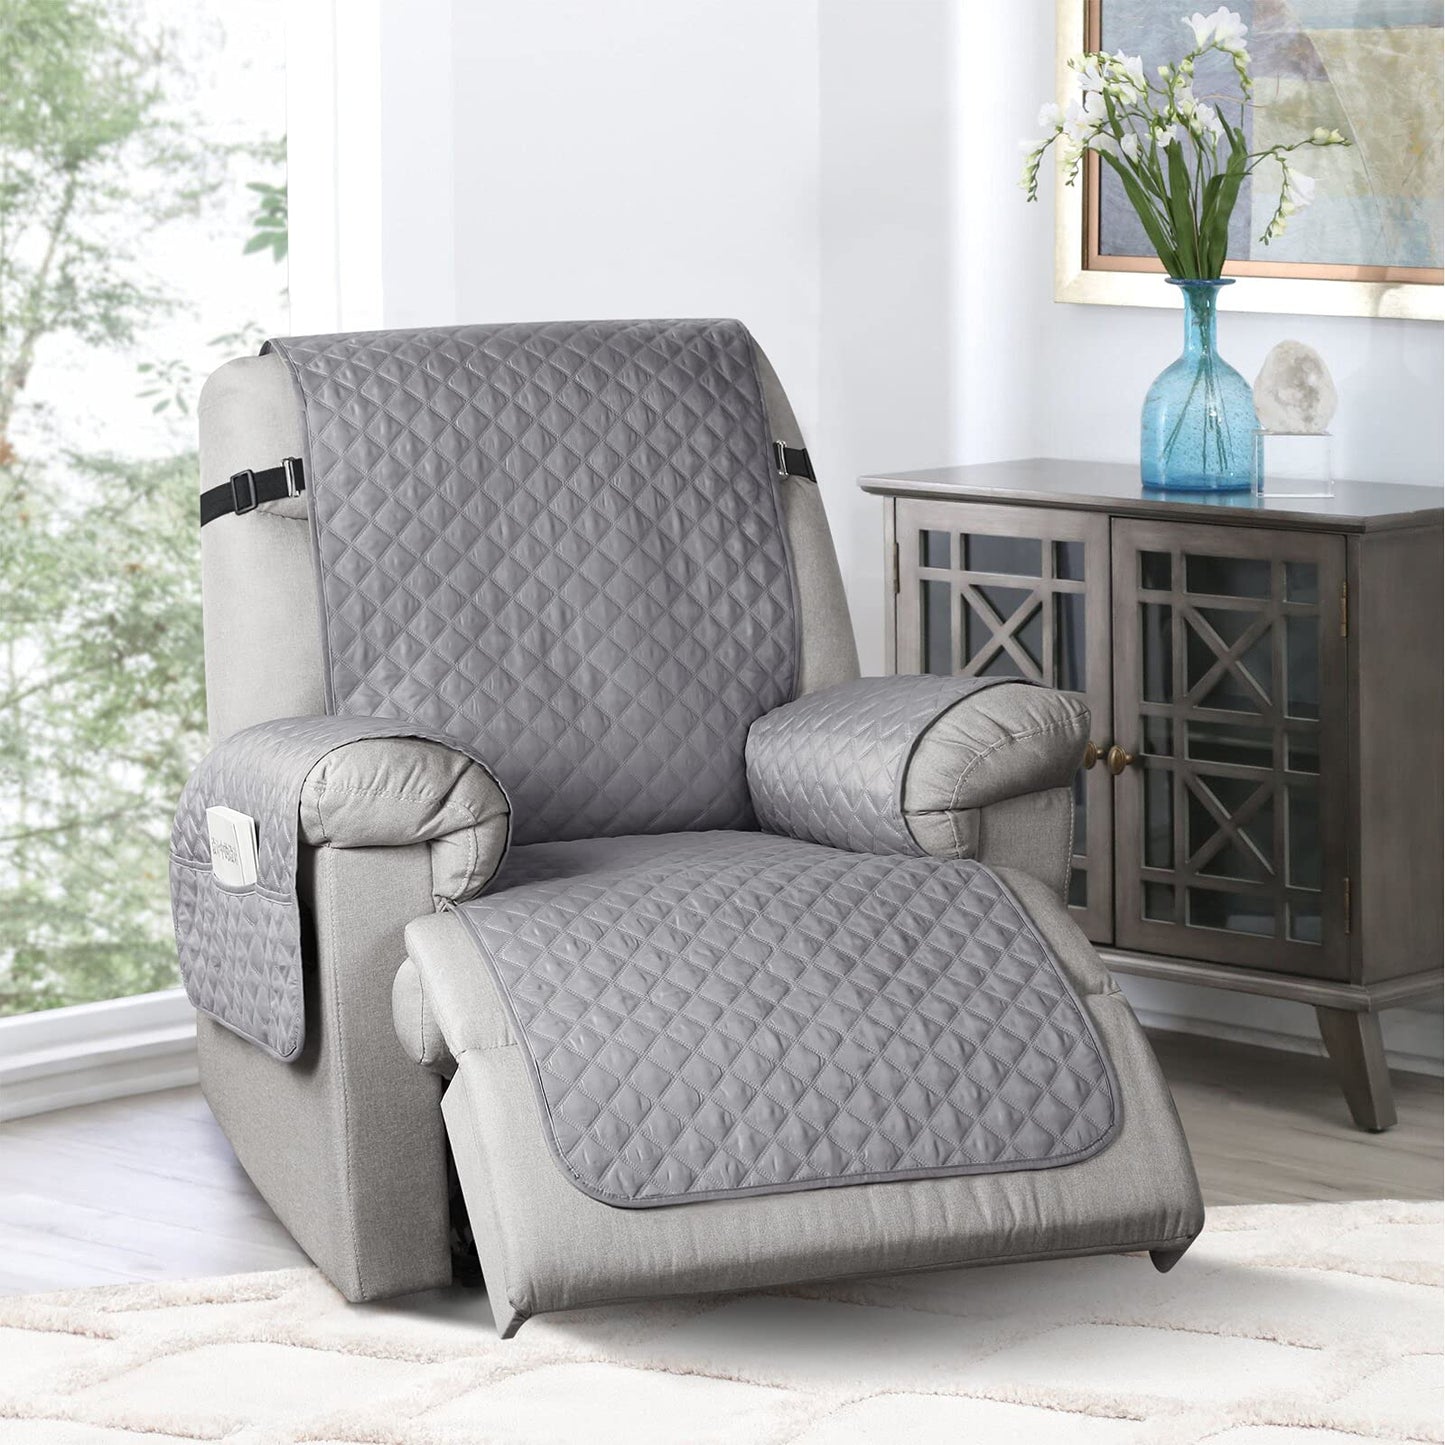 TAOCOCO Non-Slip Recliner Chair Cover Sofa Slipcover